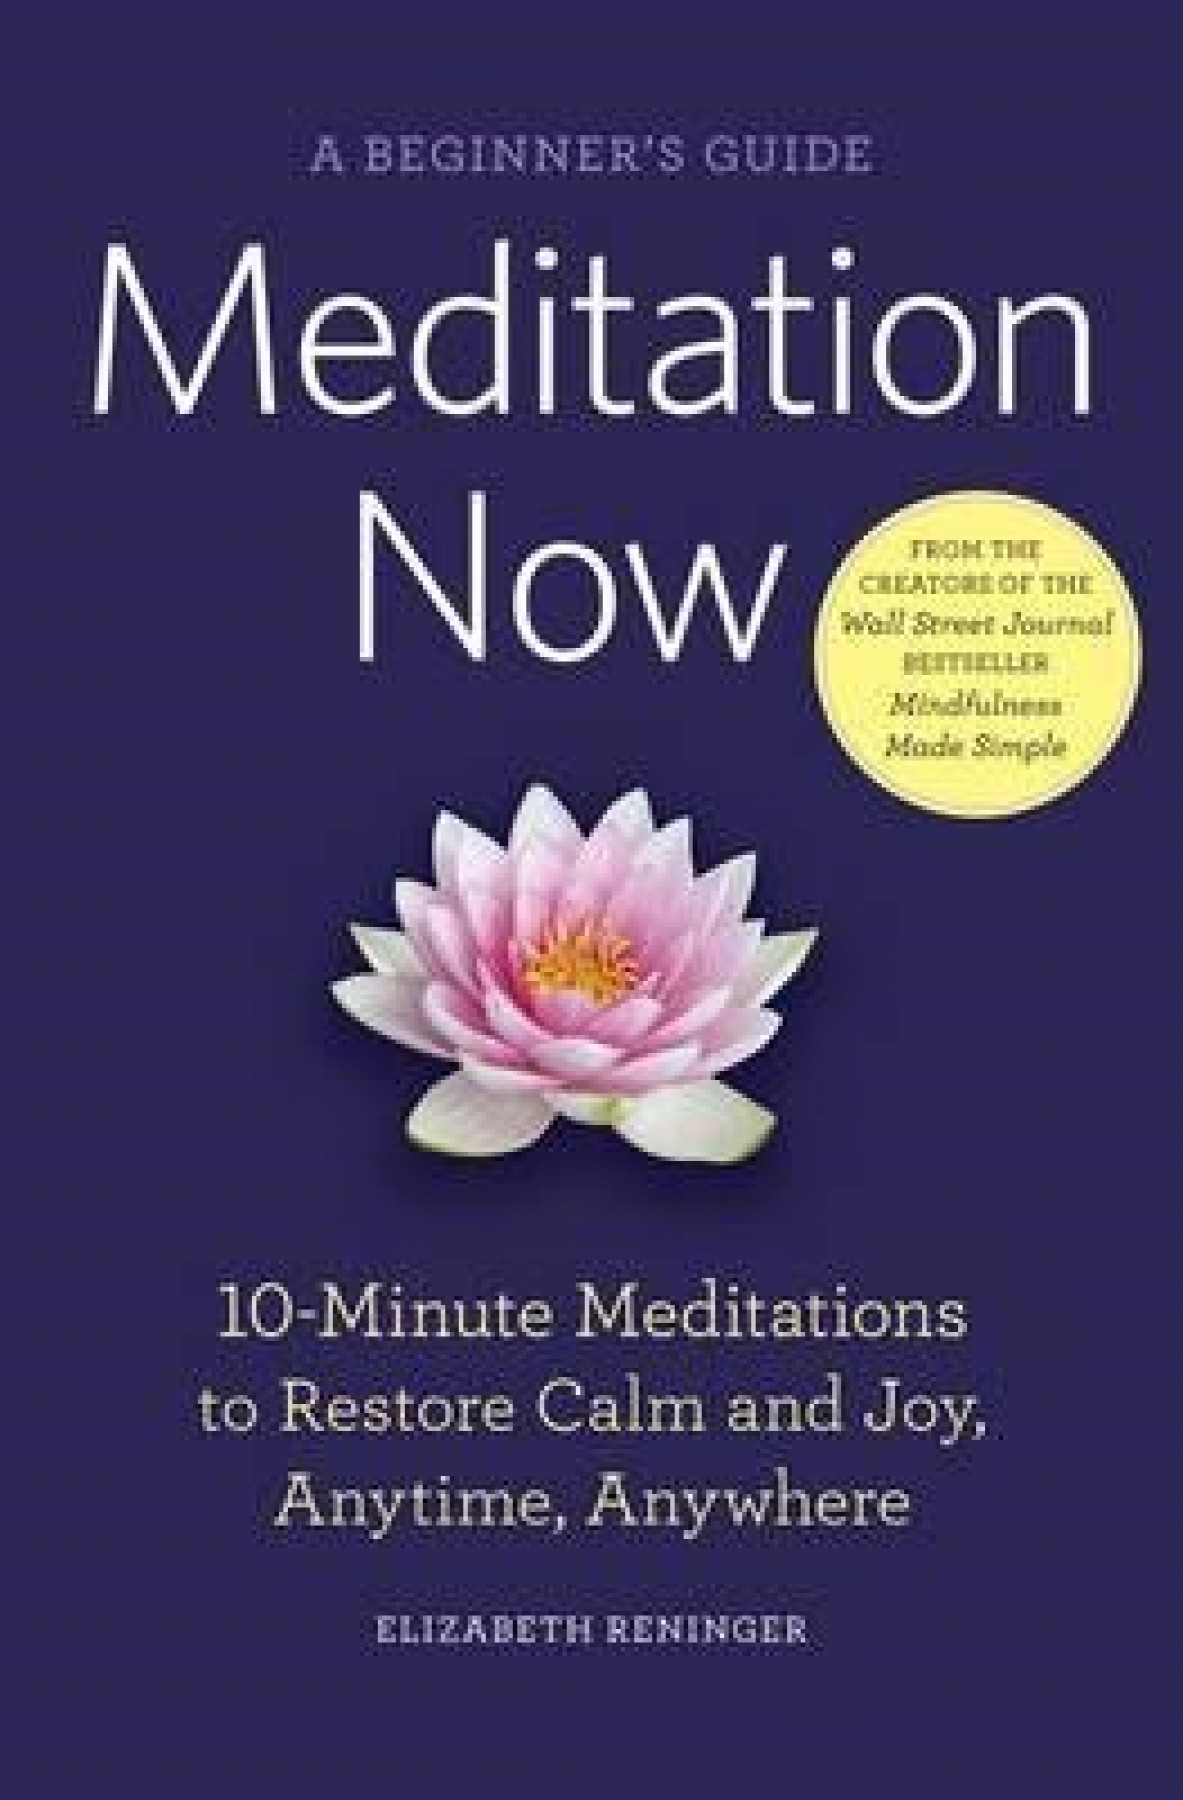 Meditation now: A beginner’s guide